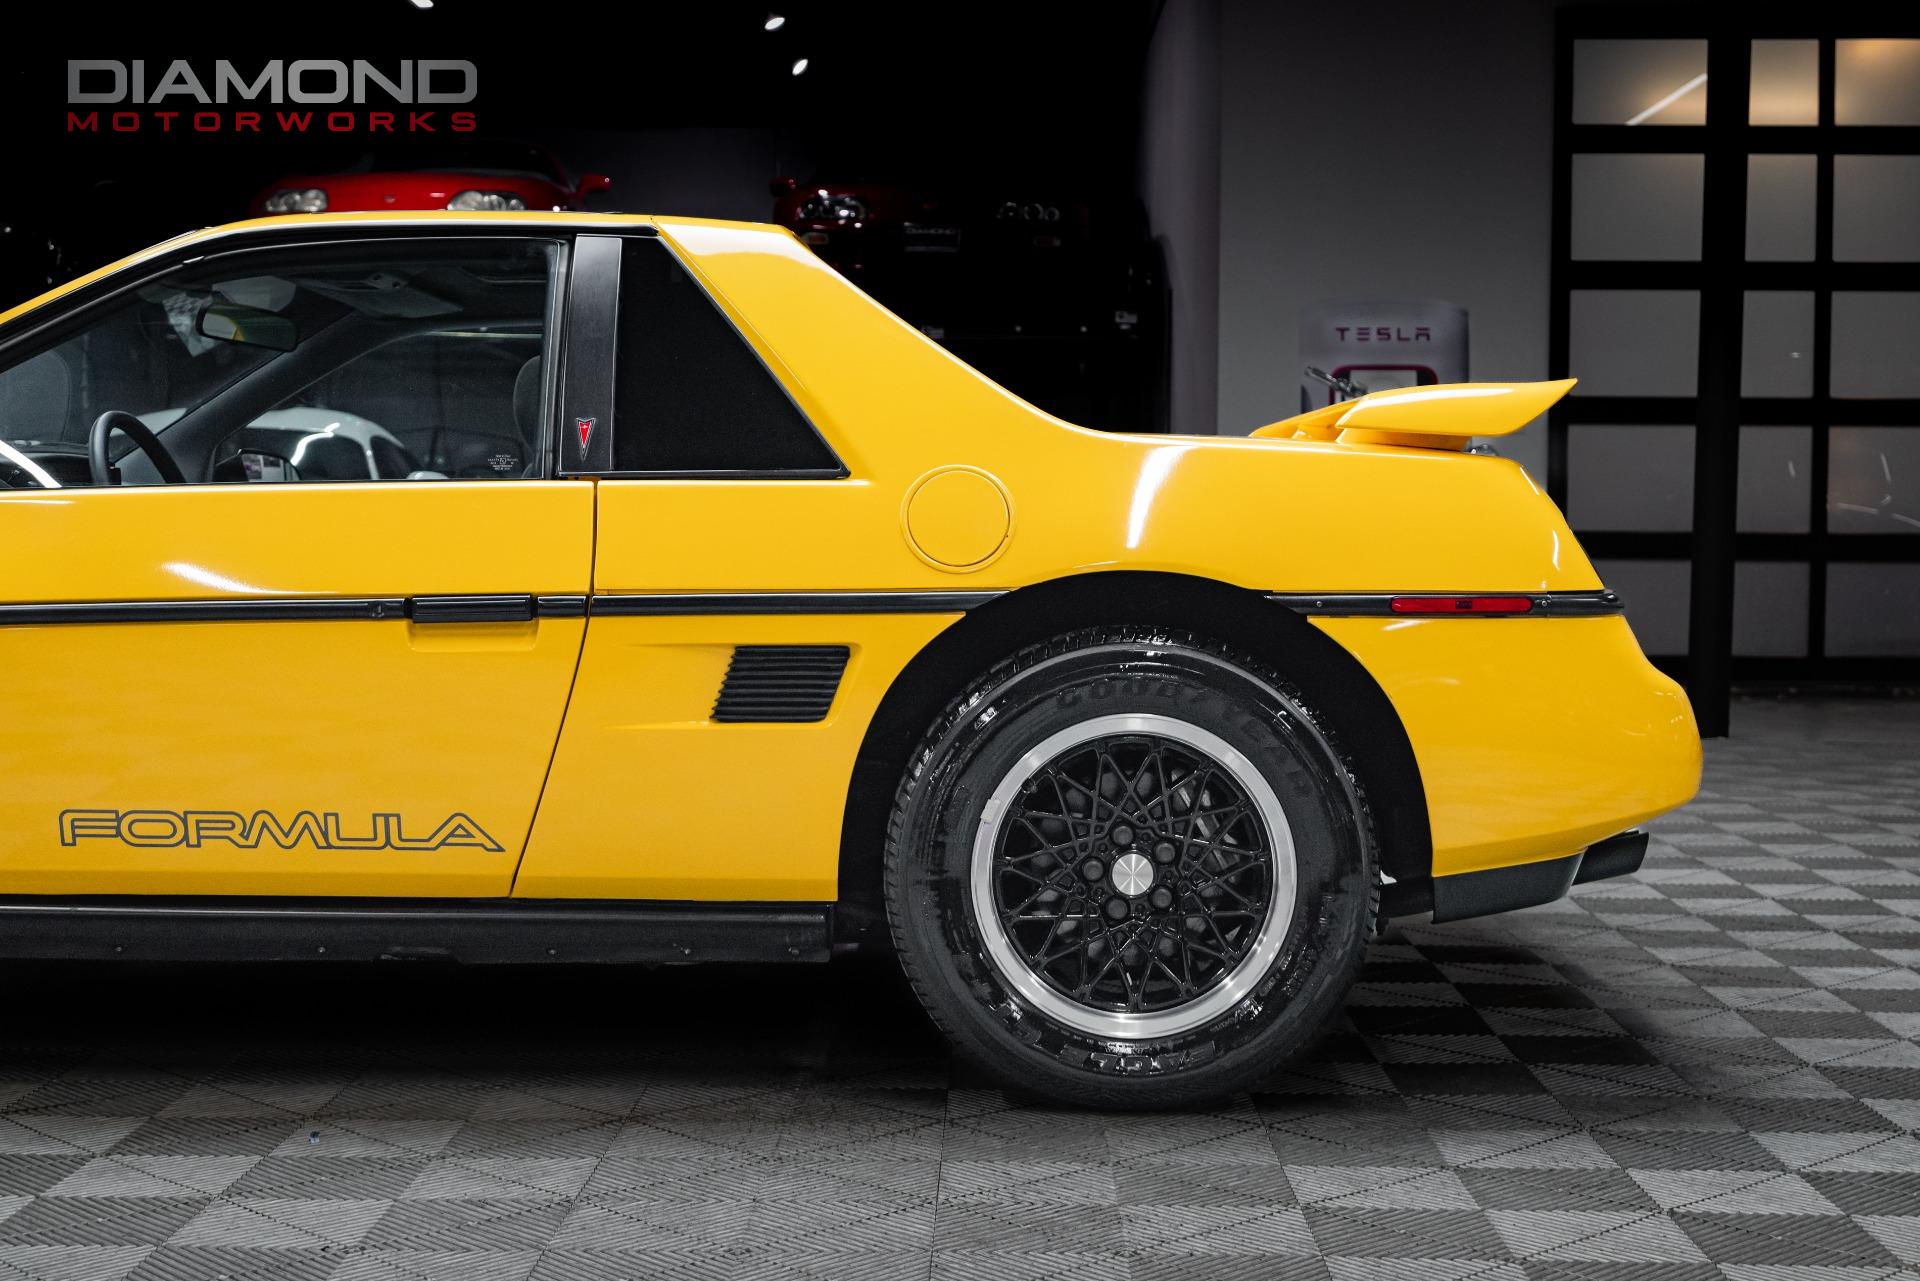 Rare Rides: A Completely Stock 1988 Pontiac Fiero Formula